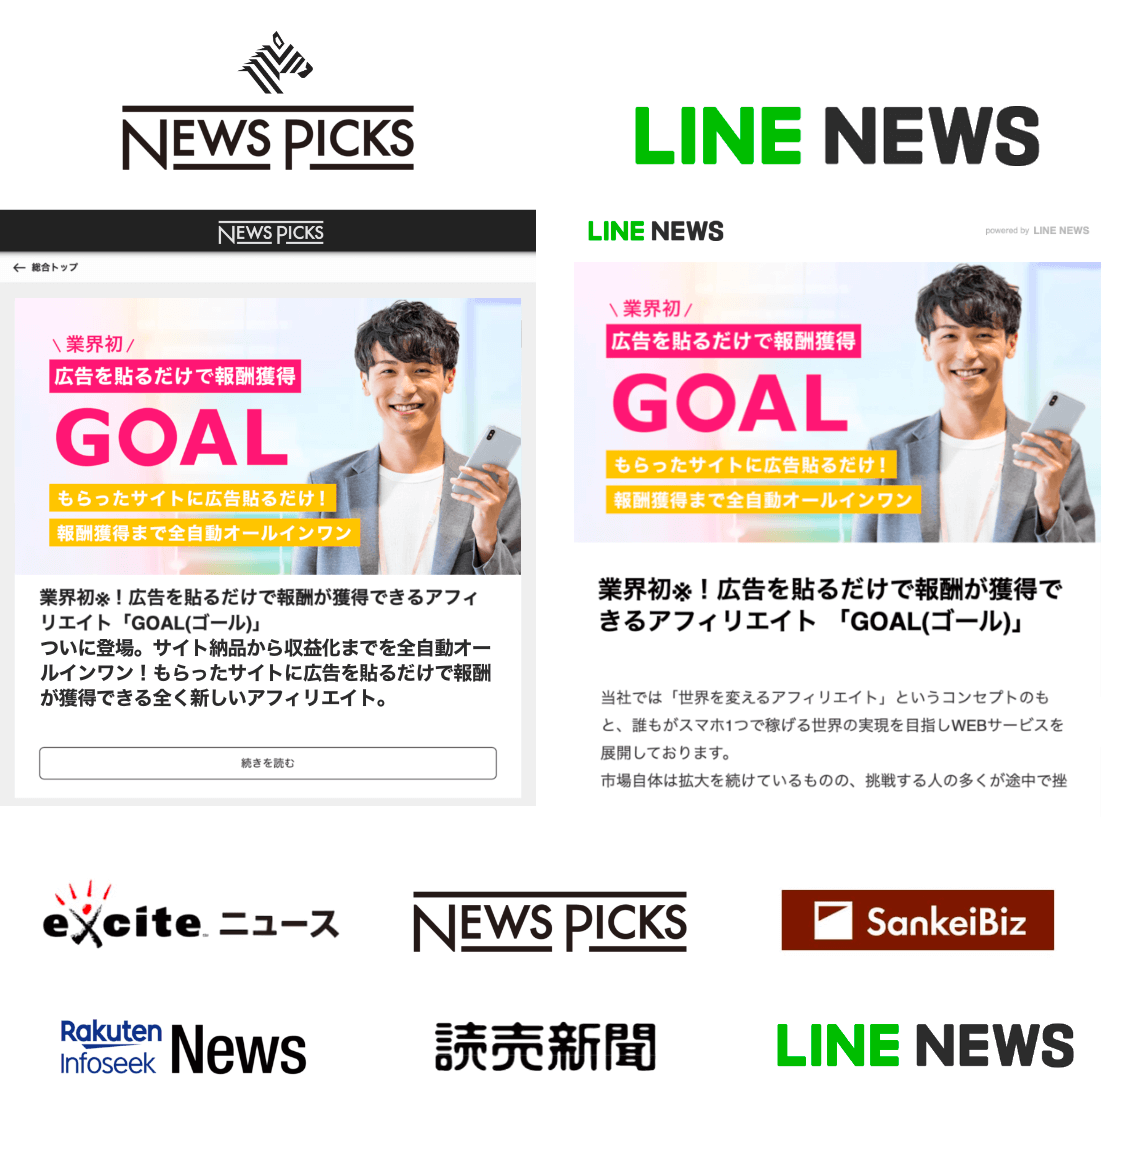 excite ニュース / LINE NEWS / 朝日新聞デジタル / Rakuten Infoseek News / 読売新聞 / Trend Times / REUTERS / SankeiBiz / 毎日新聞